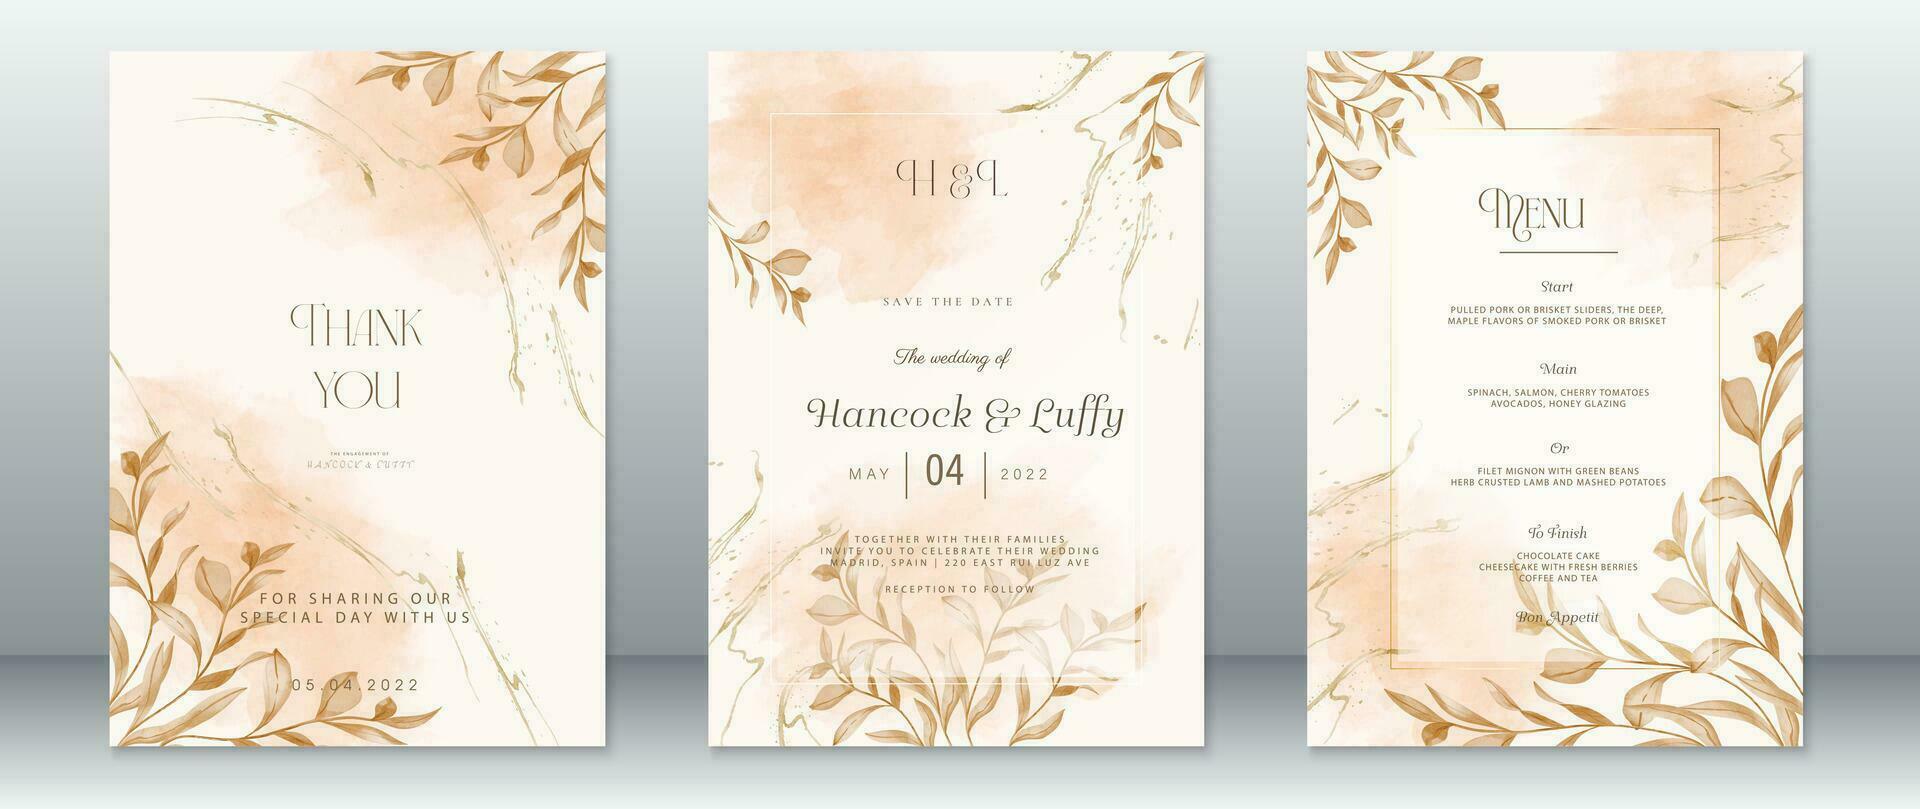 Watercolor wedding invitation card template nature design vector